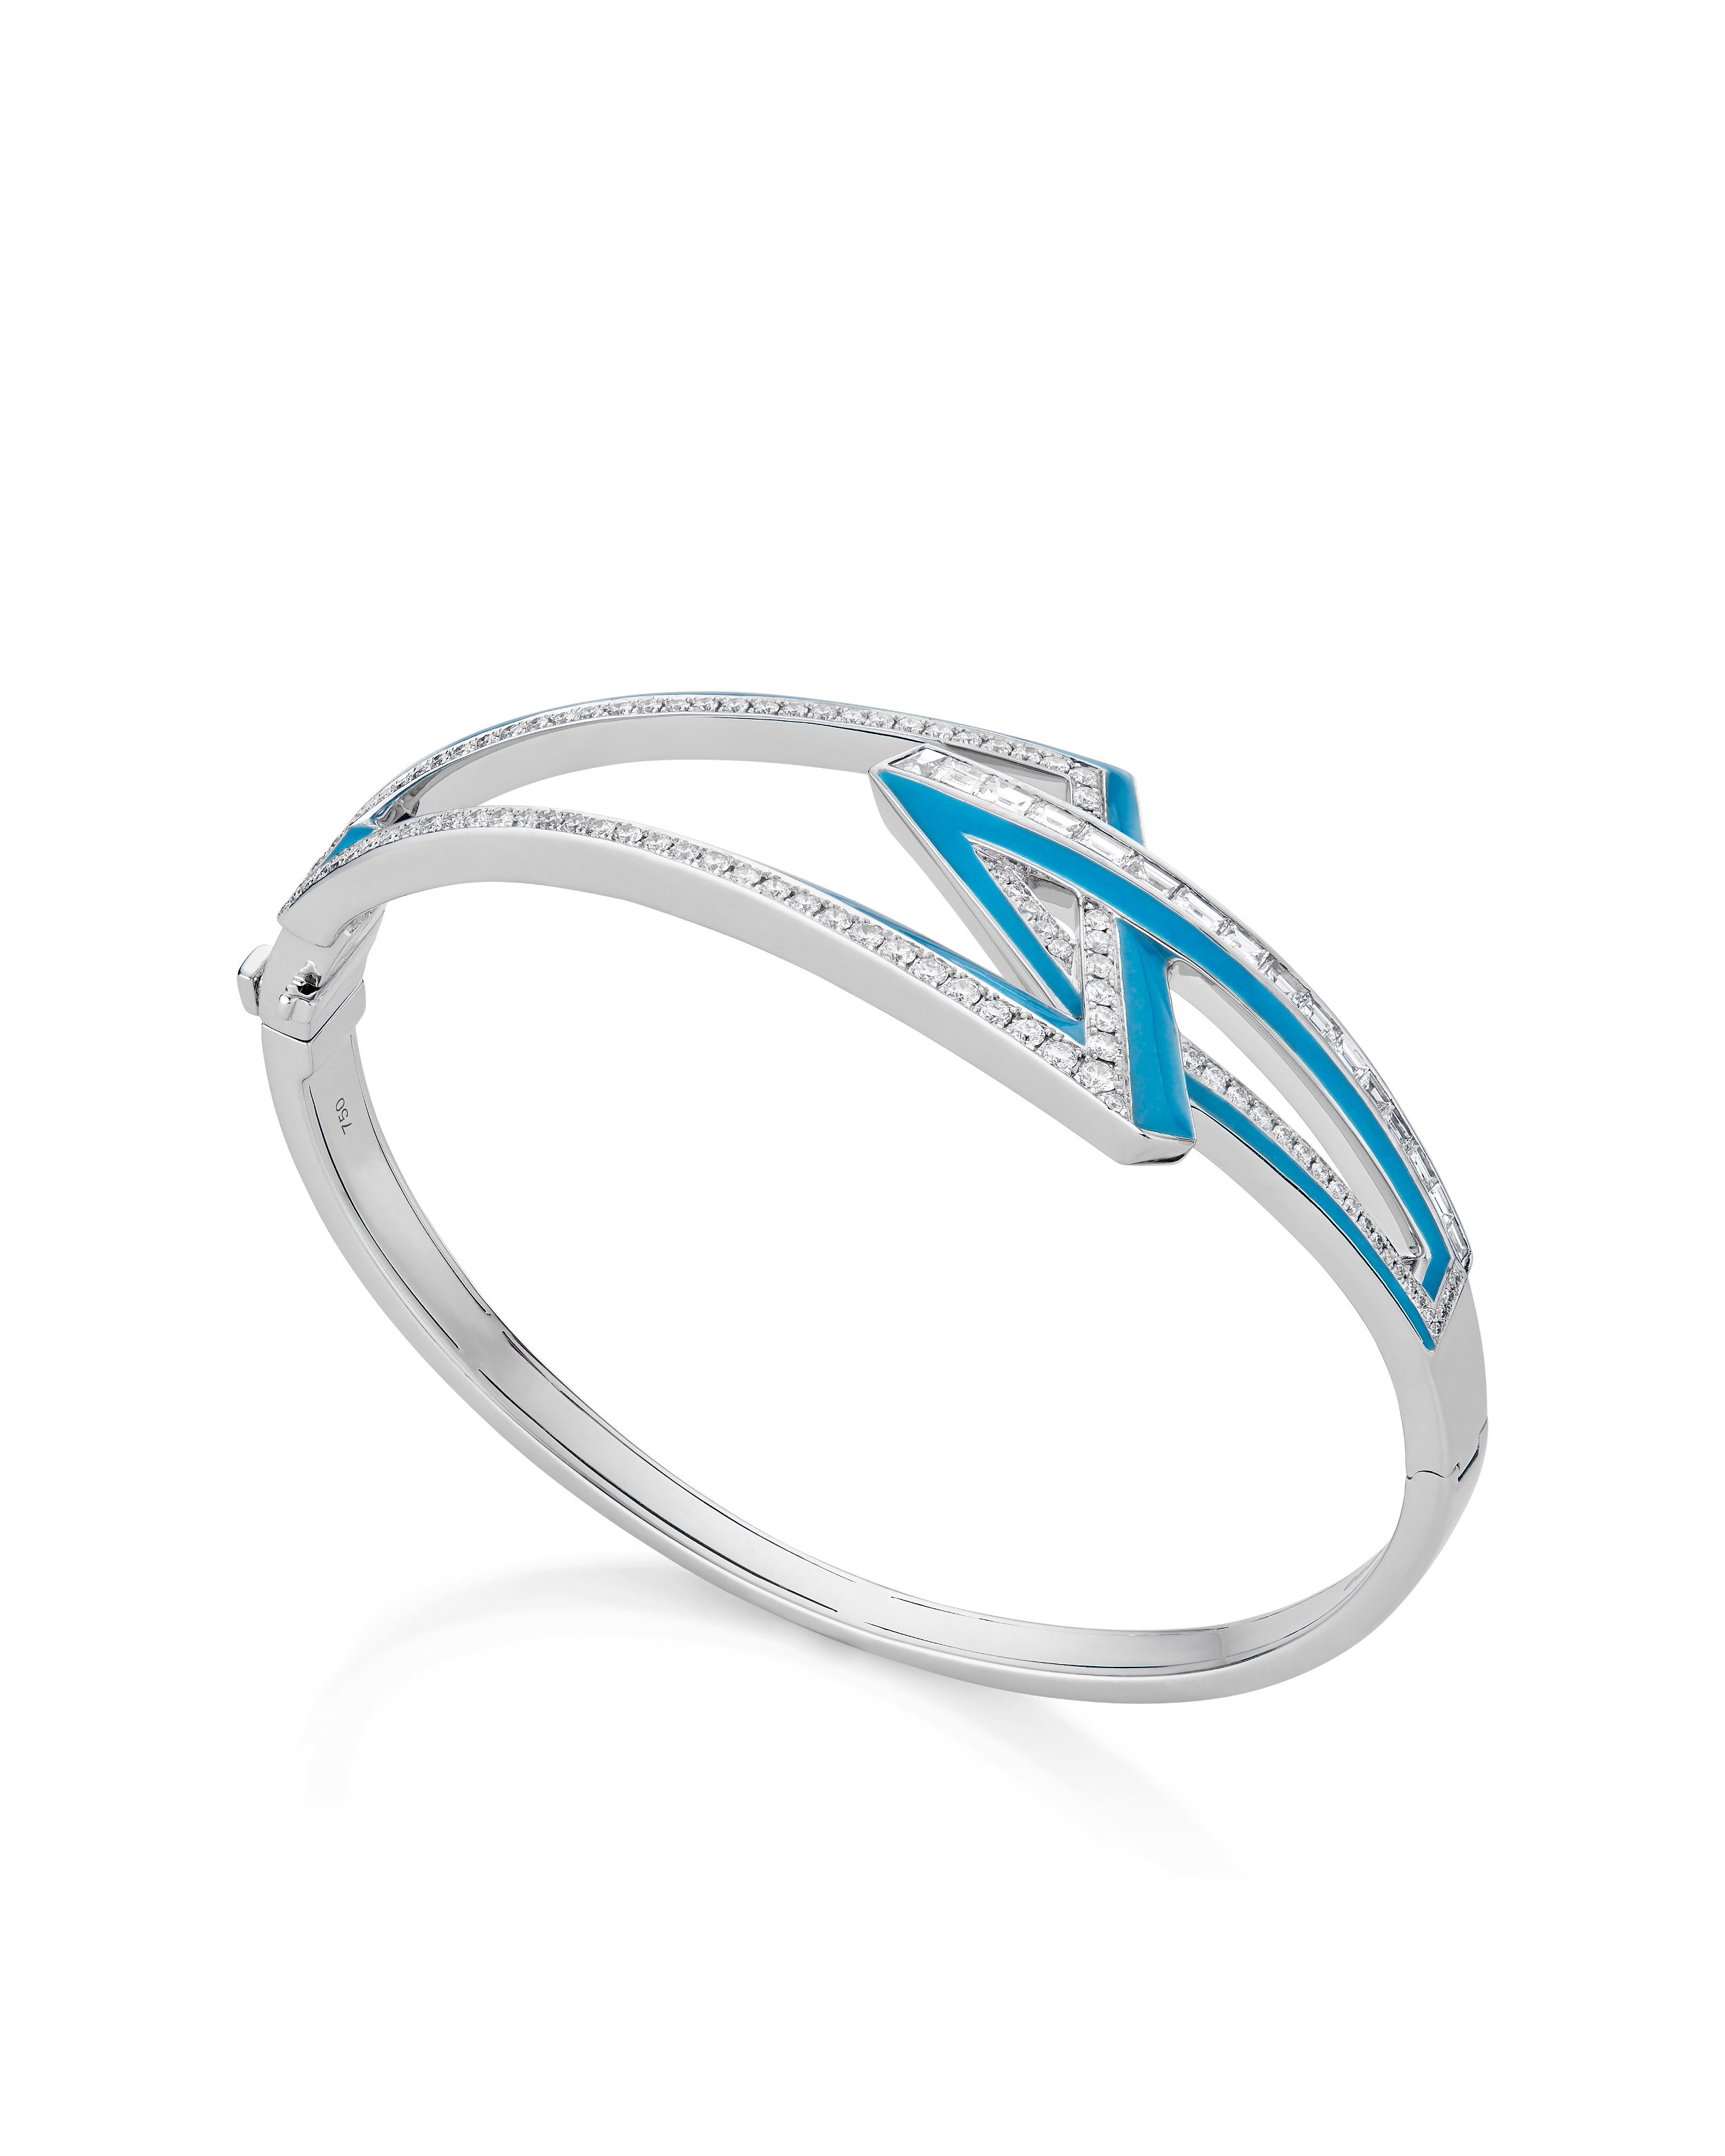 Vertigo Obtuse Bracelet with White Diamonds and Light Blue Enamel in 18kt White Gold